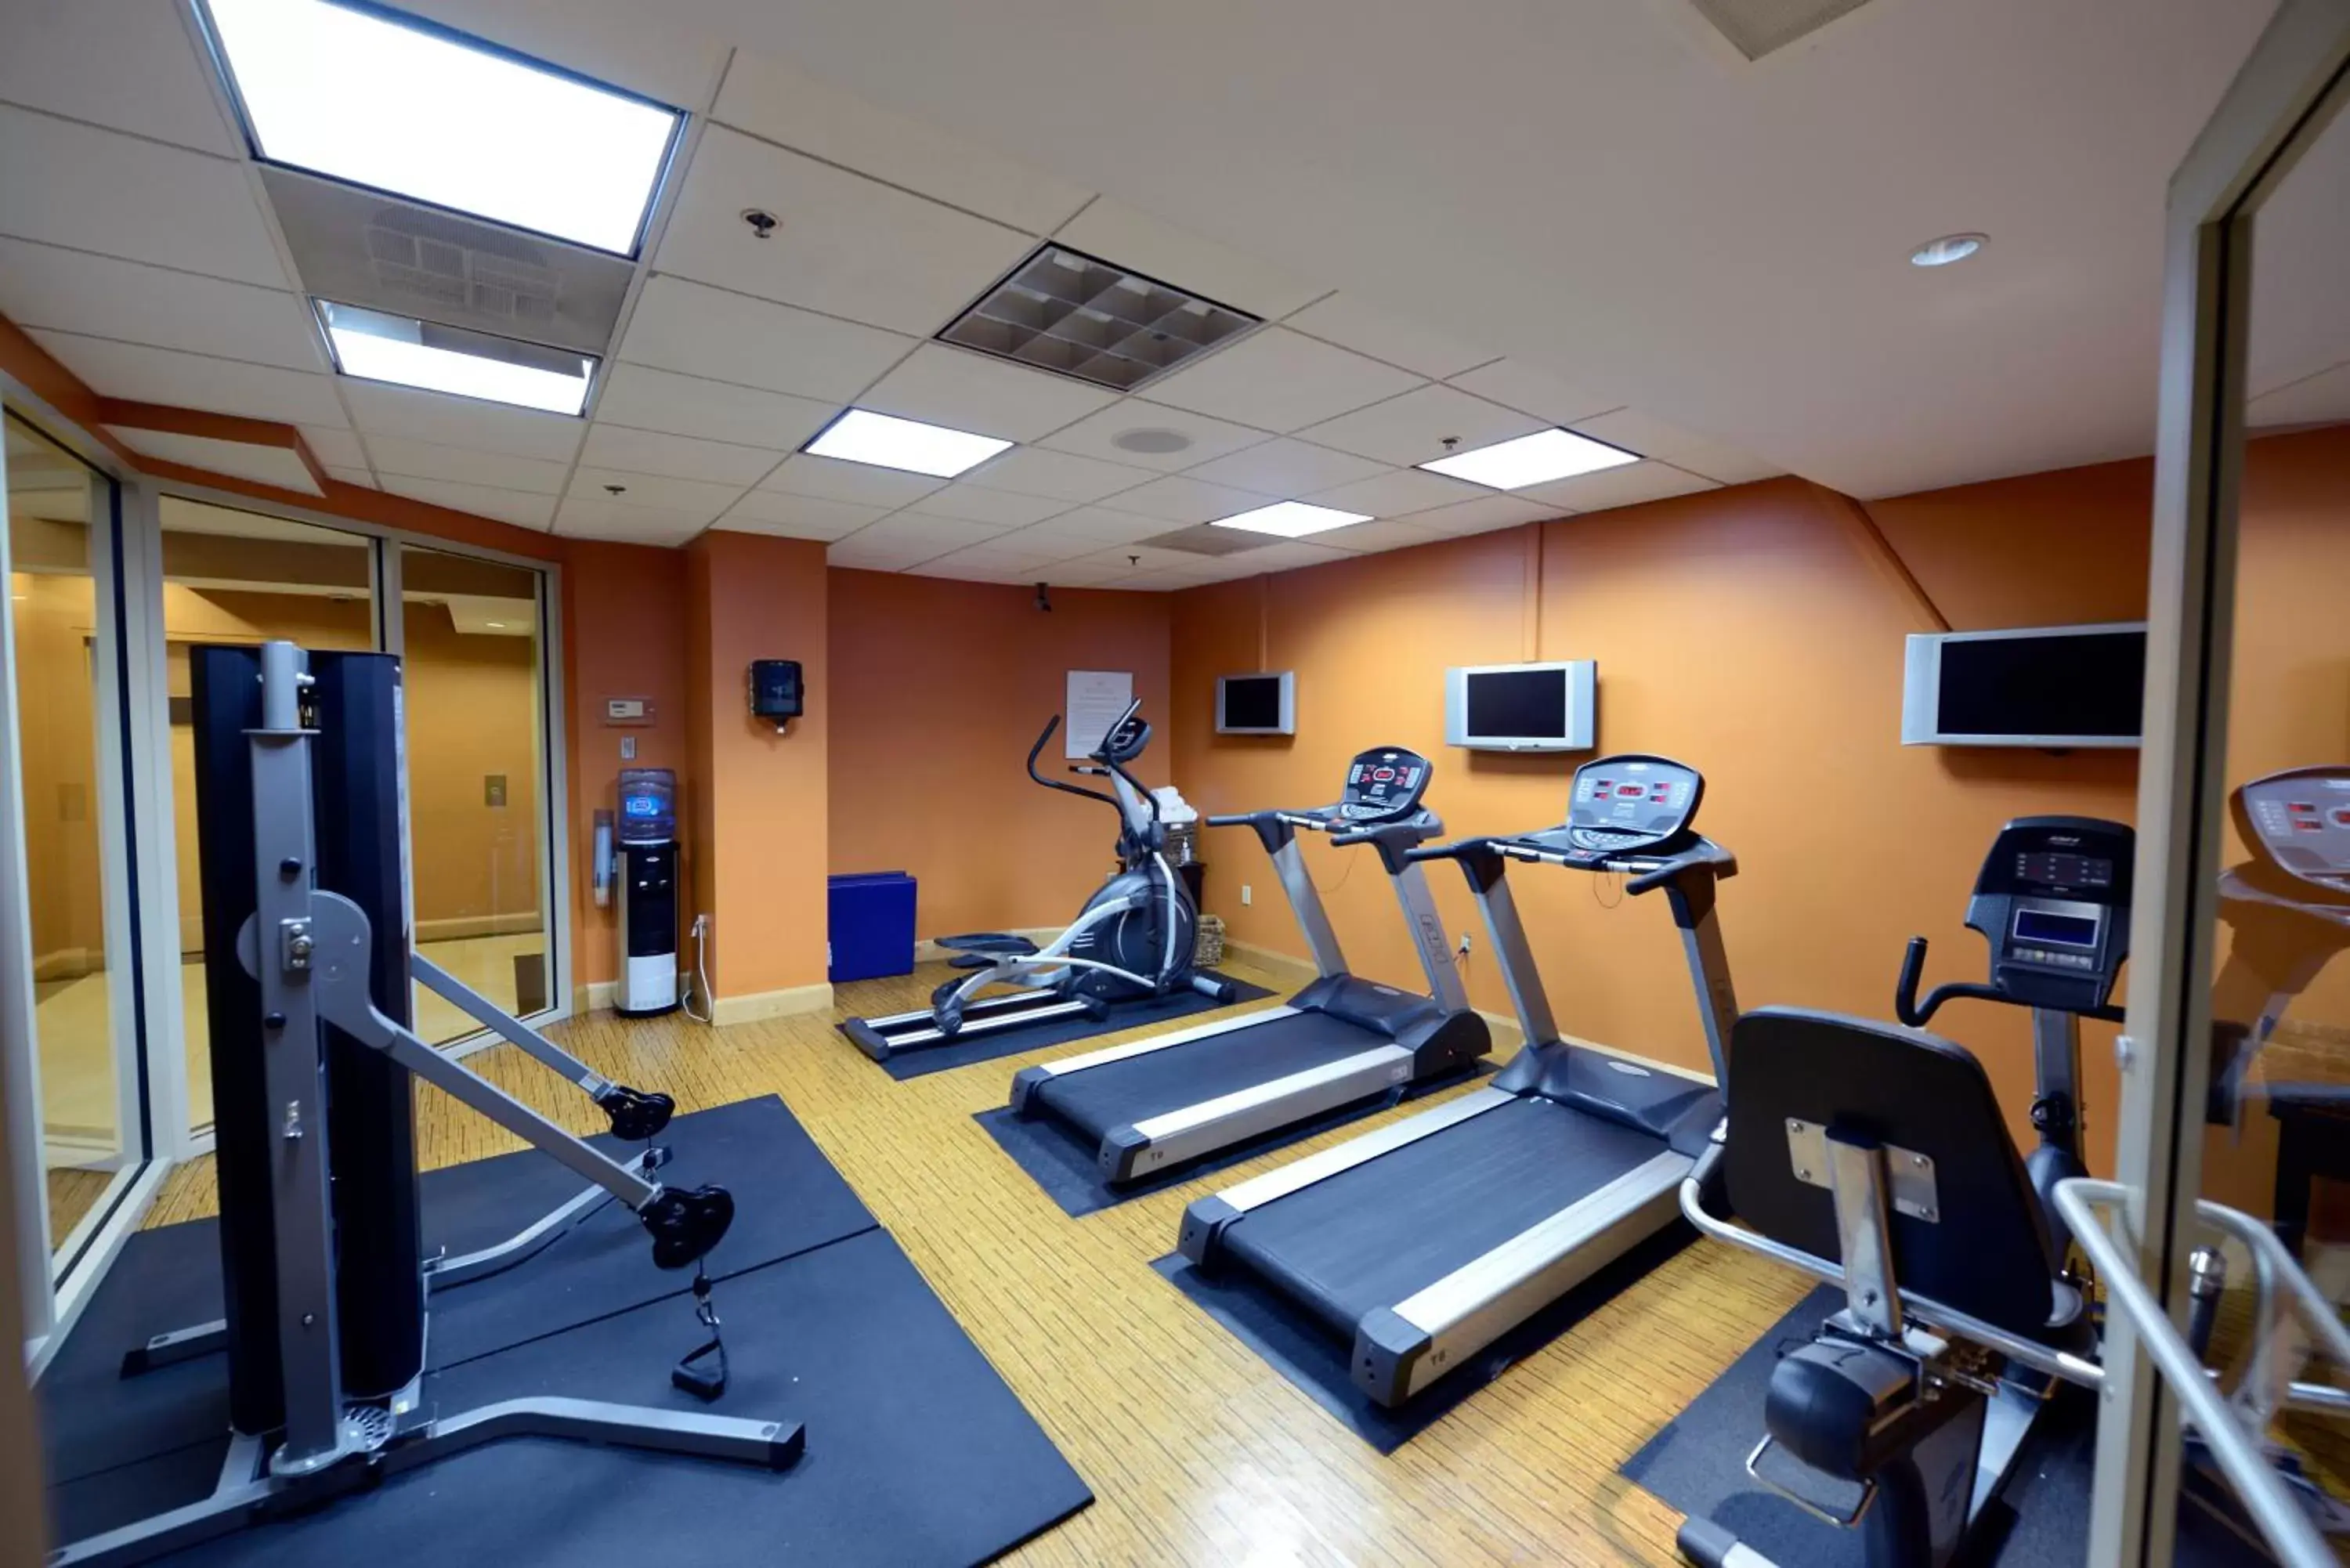 Fitness centre/facilities, Fitness Center/Facilities in Beacon Hotel & Corporate Quarters